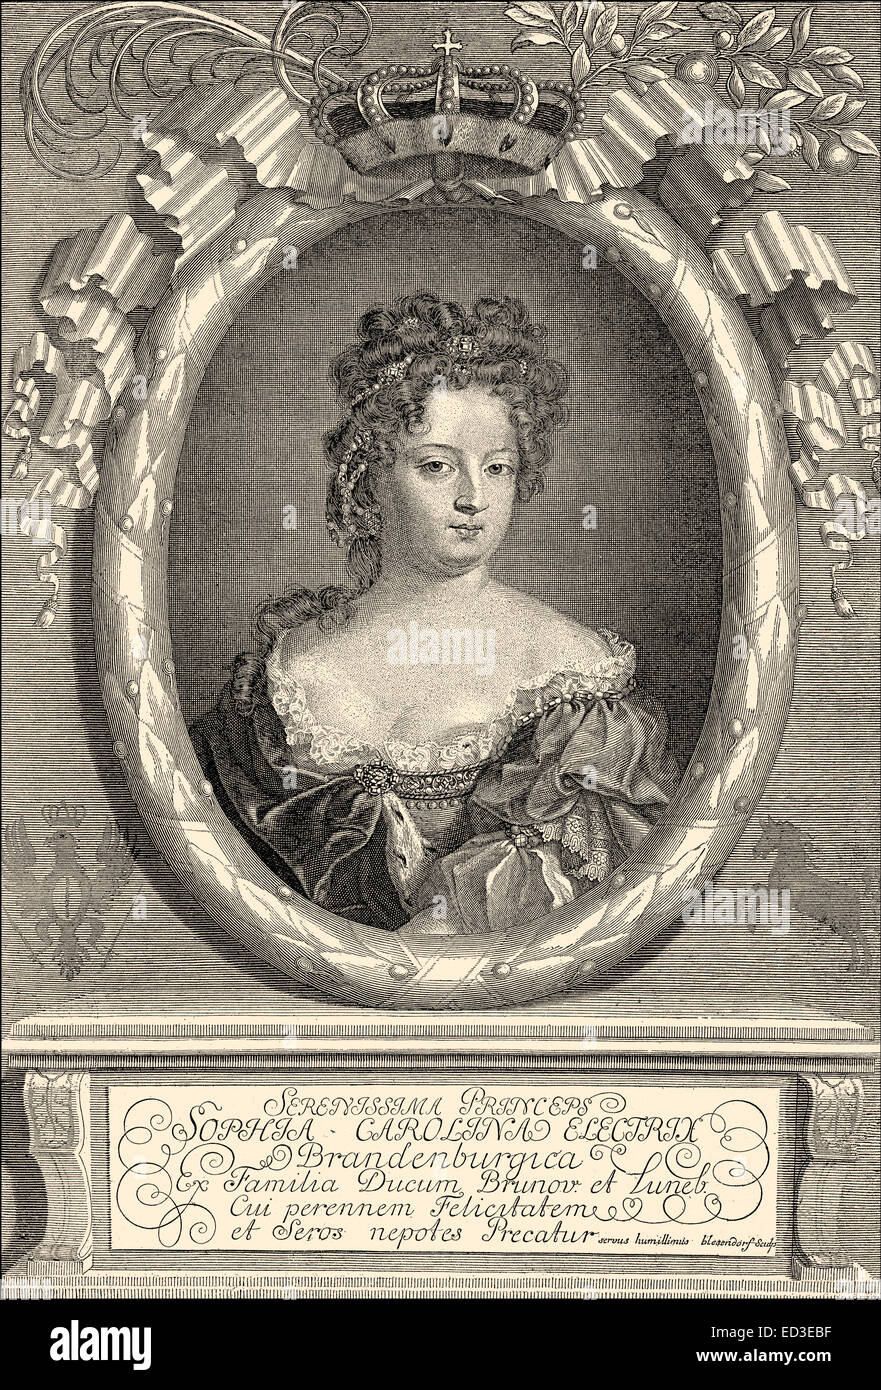 Sophia Charlotte de Hanover, 1668 - 1705, la primera reina consorte de Prusia como esposa del Rey Federico I, Sophie Charlotte Herzo Foto de stock